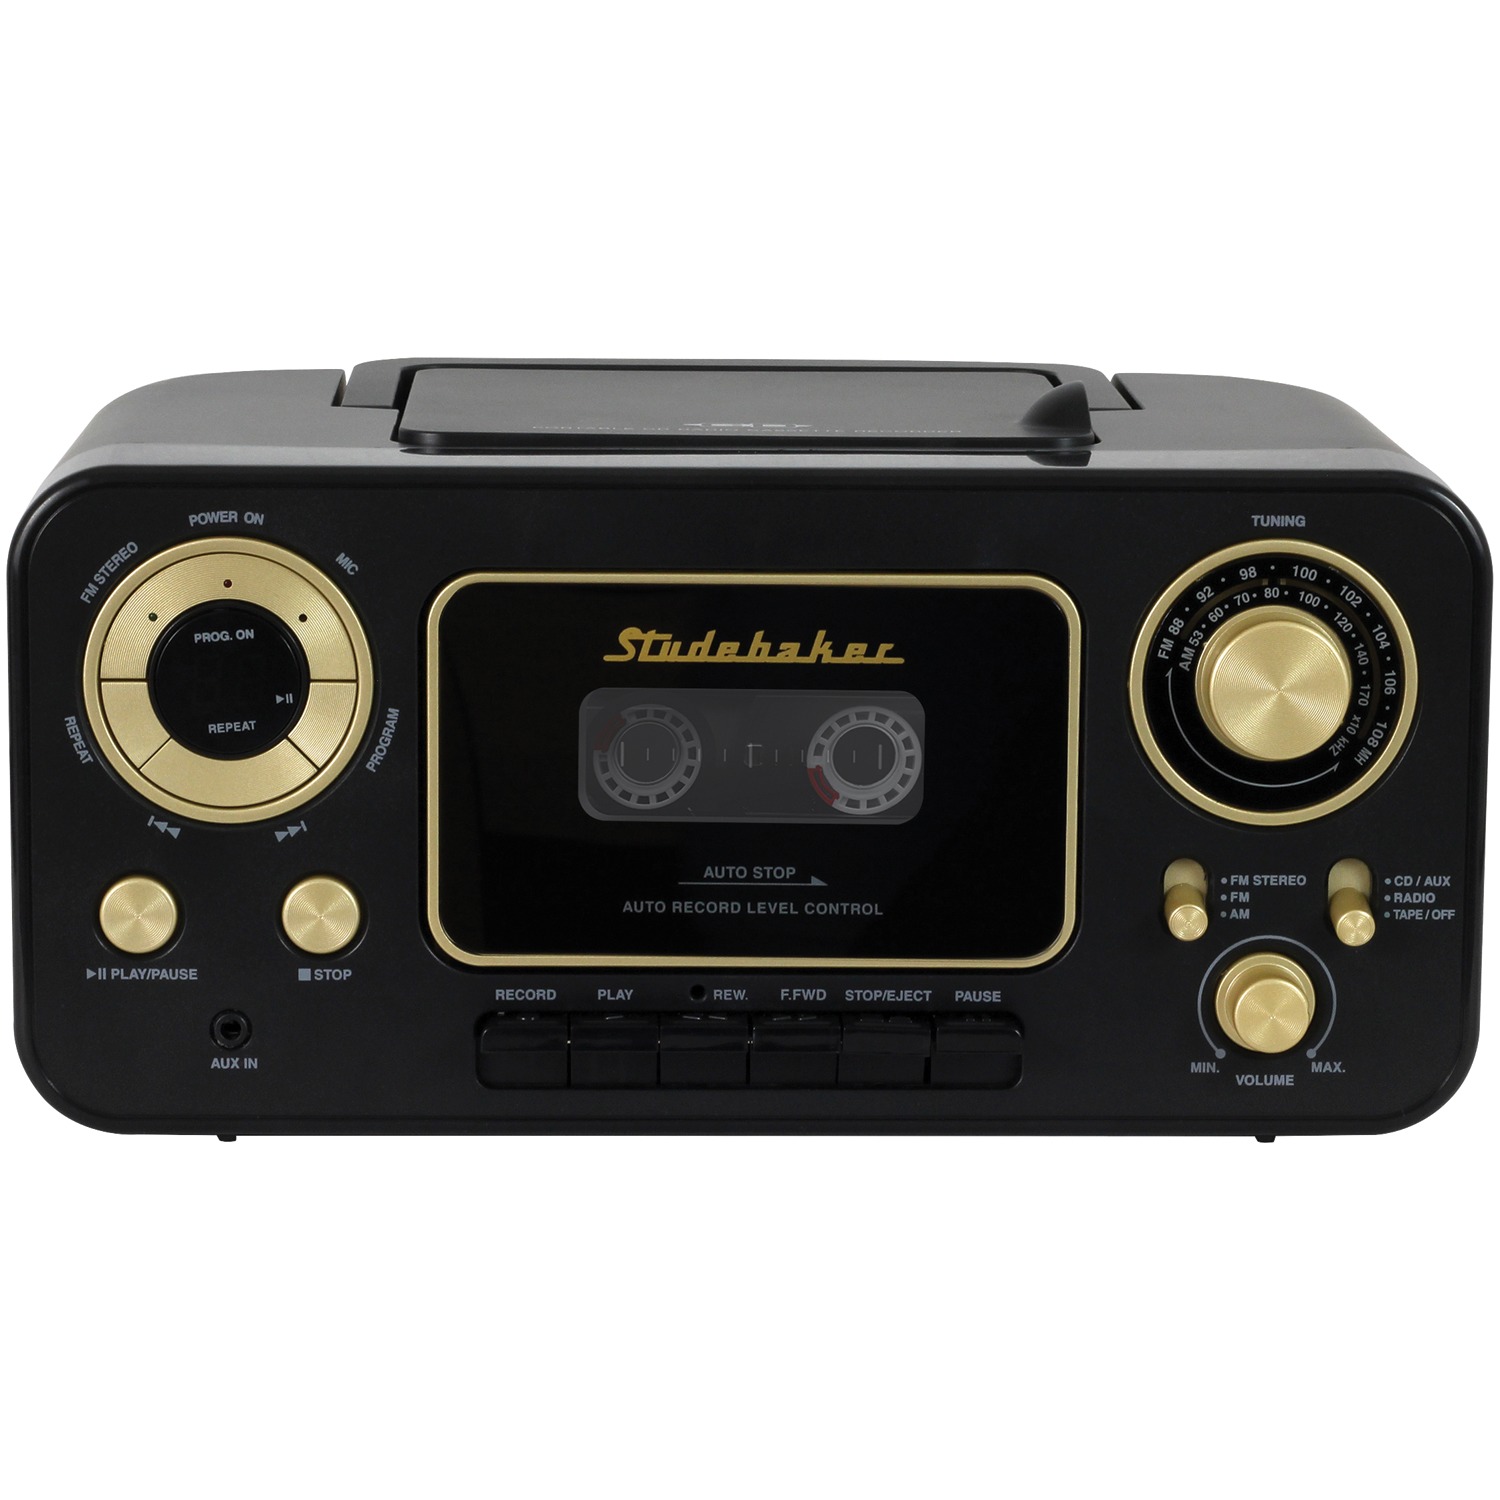 Studebaker SB2135BG Portable Stereo CD Player with AM/FM Radio & Cassette Player/Recorder (Black & Gold) - image 1 of 4